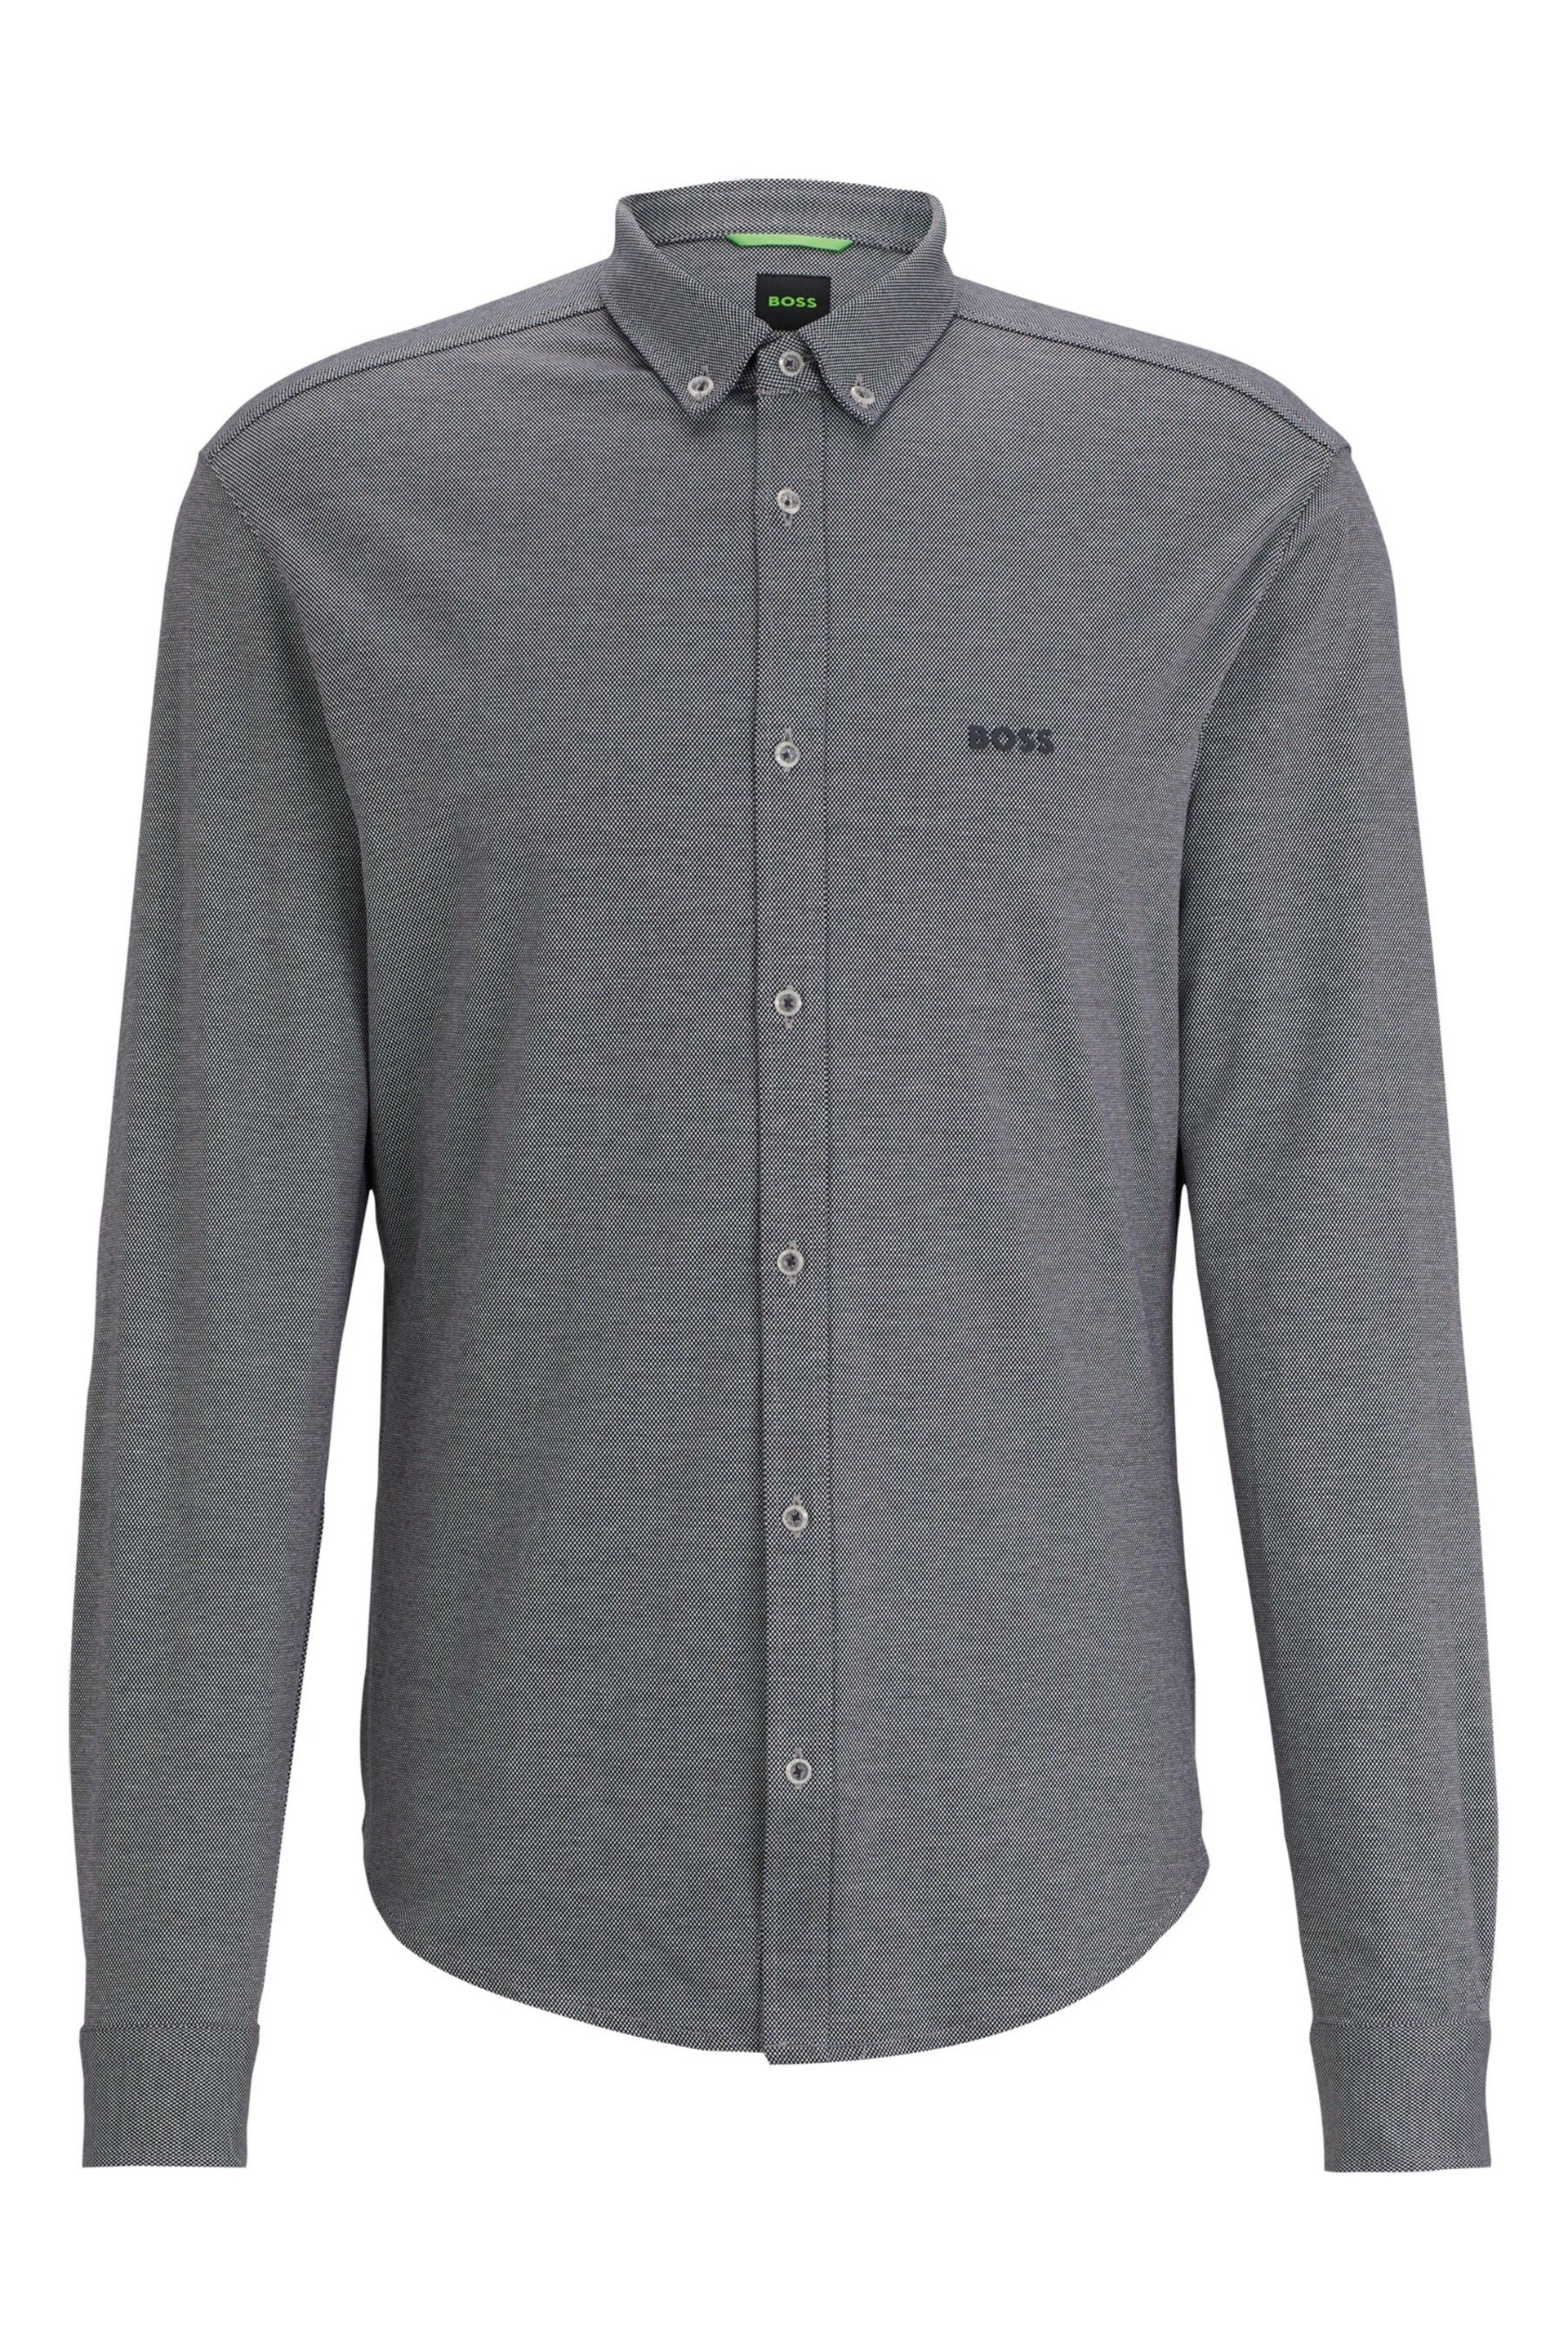 BOSS Grey Biado Long Sleeve Jersey Shirt - Image 7 of 7